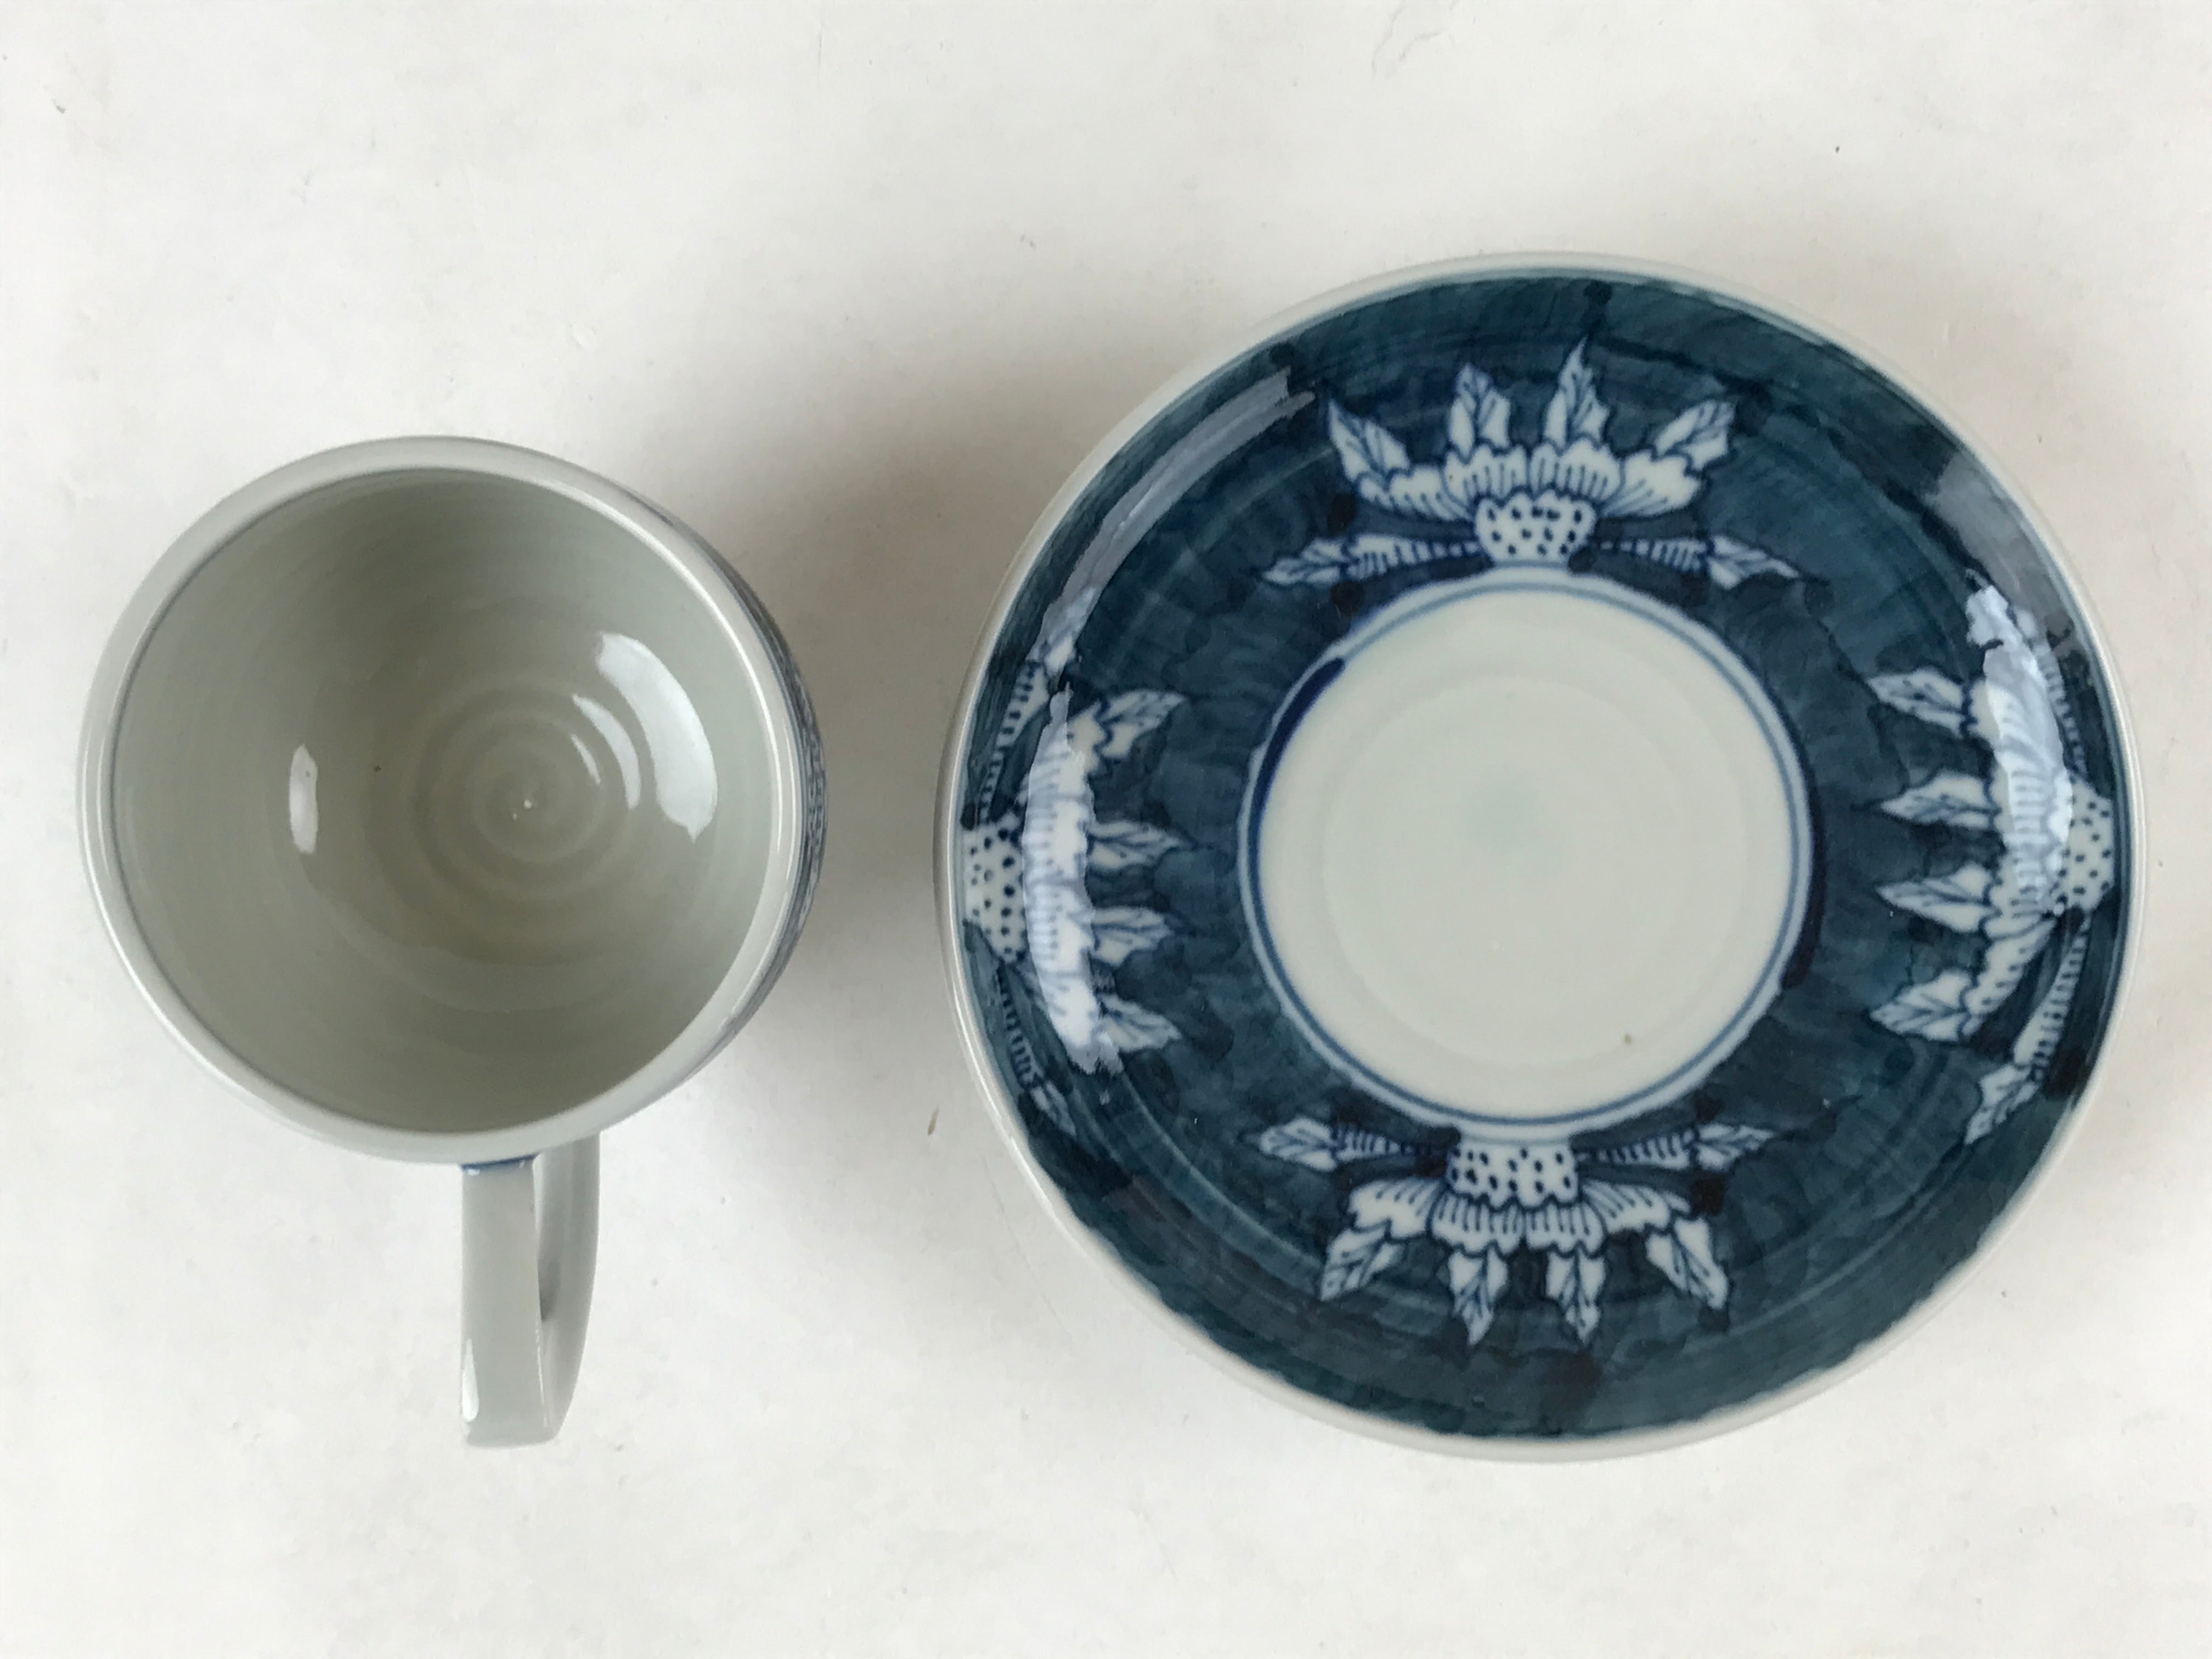 Japanese Ceramic Sometsuke Teacup And Saucer Vtg Pottery White Blue Floral PY590